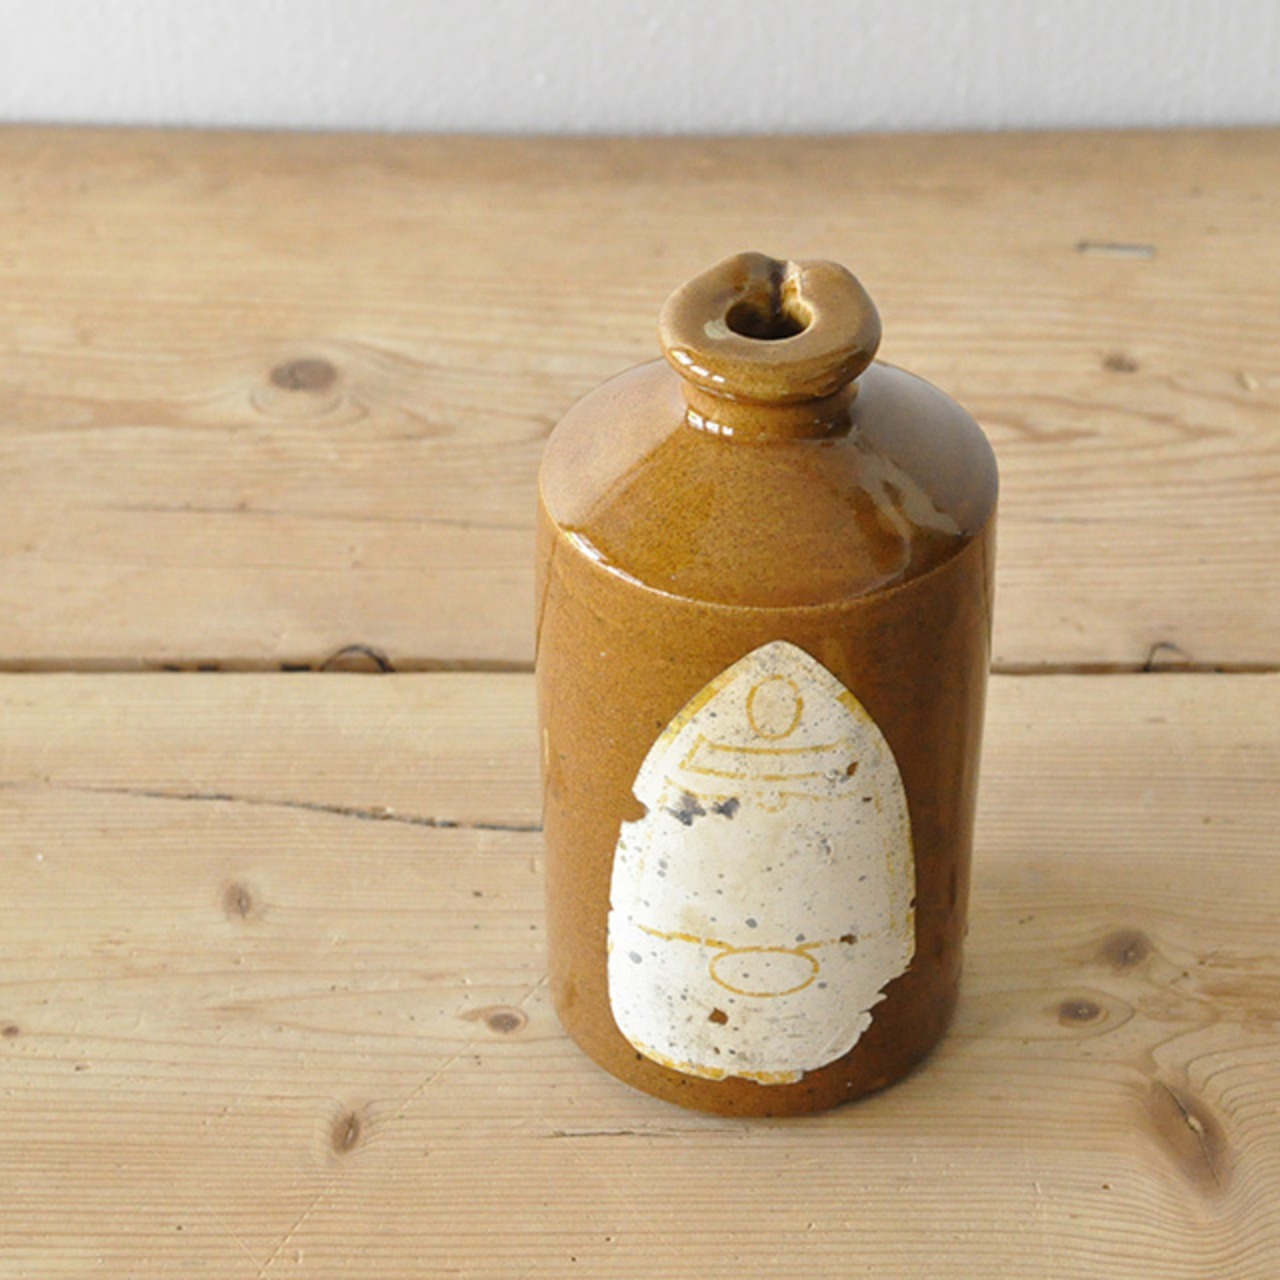 Pottery Bottle / ポタリー ボトル / 1911-0199-1